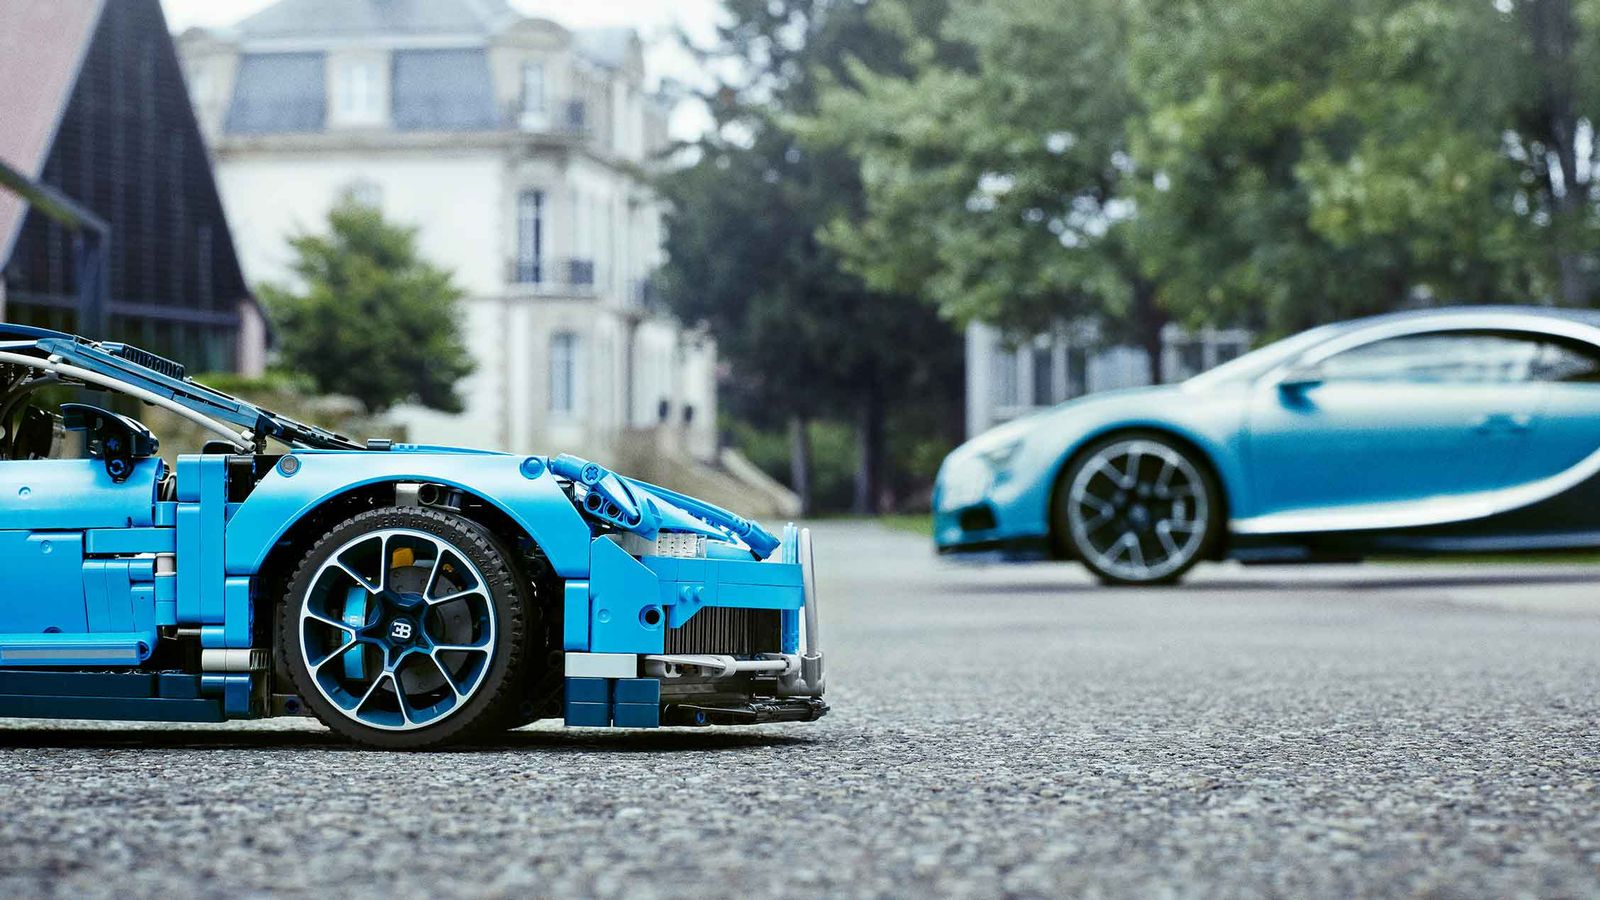 LEGO Technic Bugatti Chiron, set 42083 alongside the genuine article. Image © LEGO.